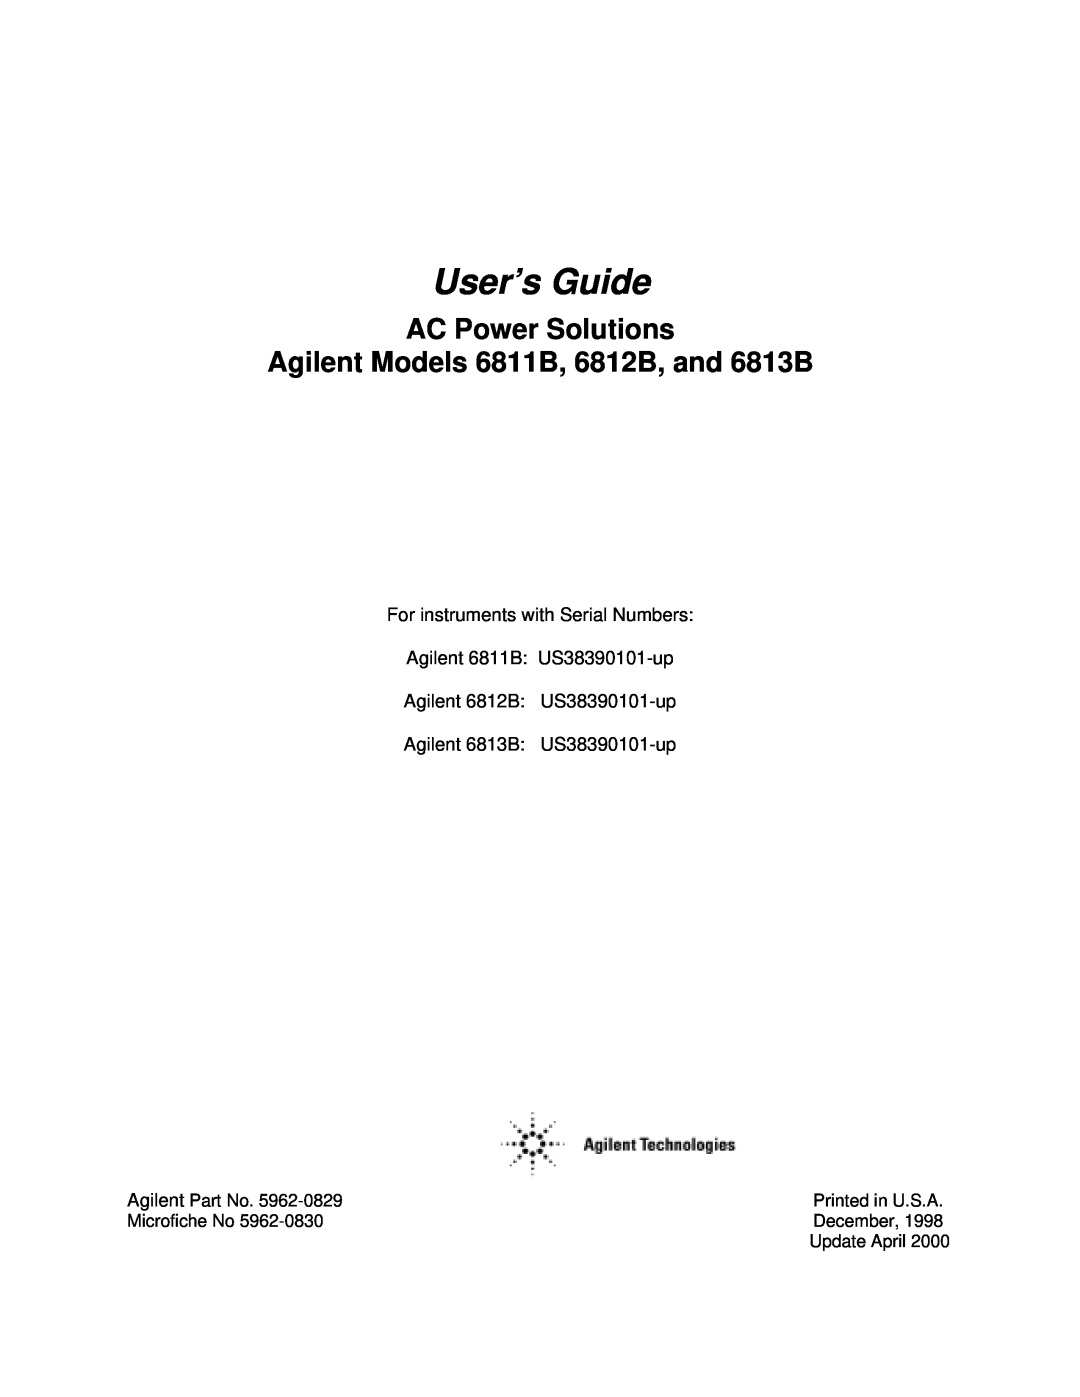 Agilent Technologies manual AC Power Solutions, Agilent Models 6811B, 6812B, 6813B, 6814B, 6834B, and 6843A 